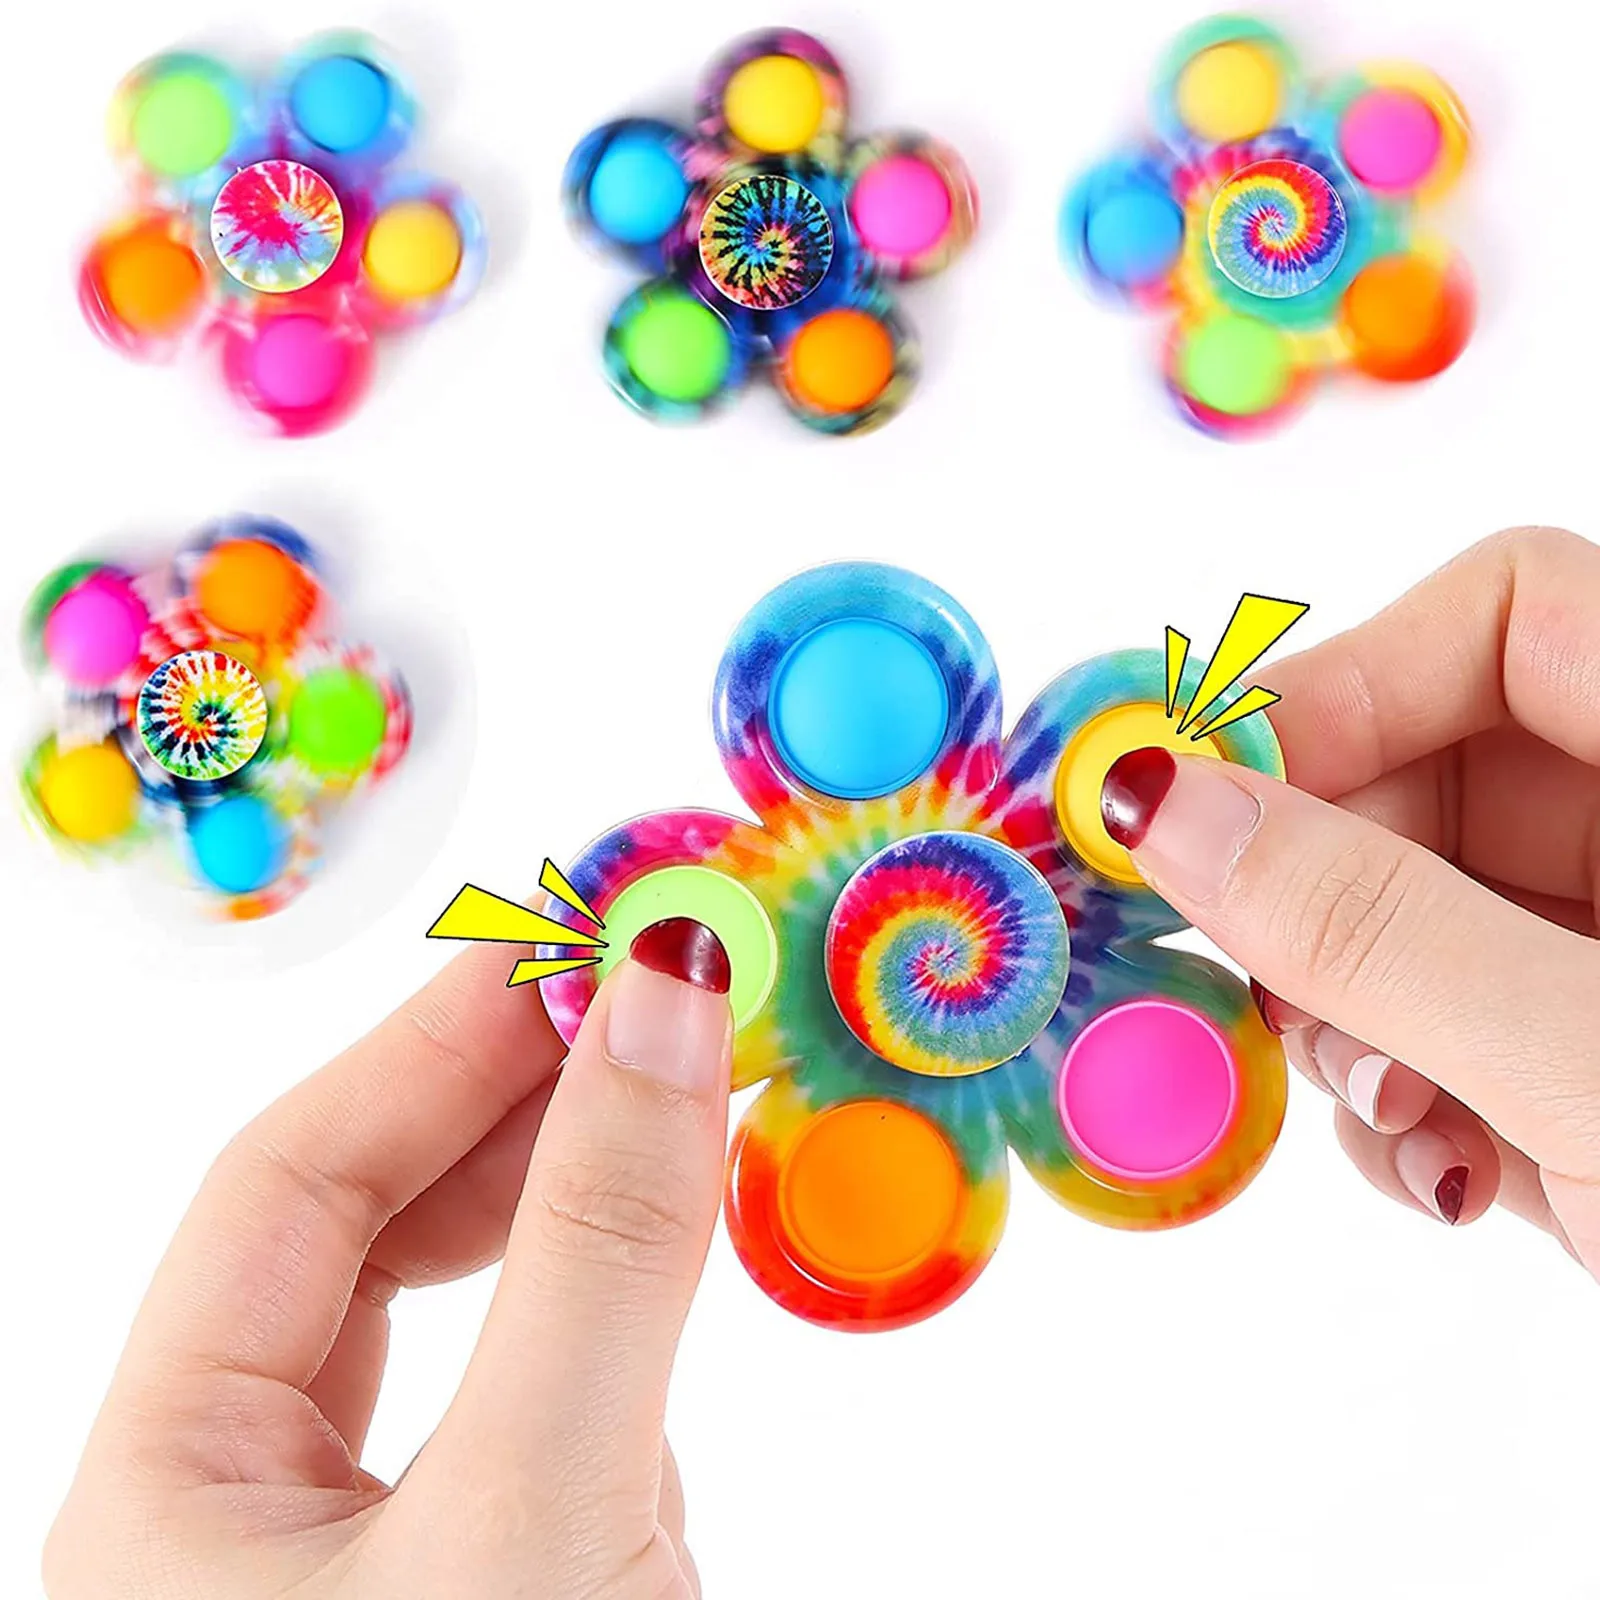 

Rainbow Bubble Pop Fidget Kid Toy Sensory Autisim Special Need Its Anti-stress Stress Relief Squishy Fidget Spinner Toy For Kids